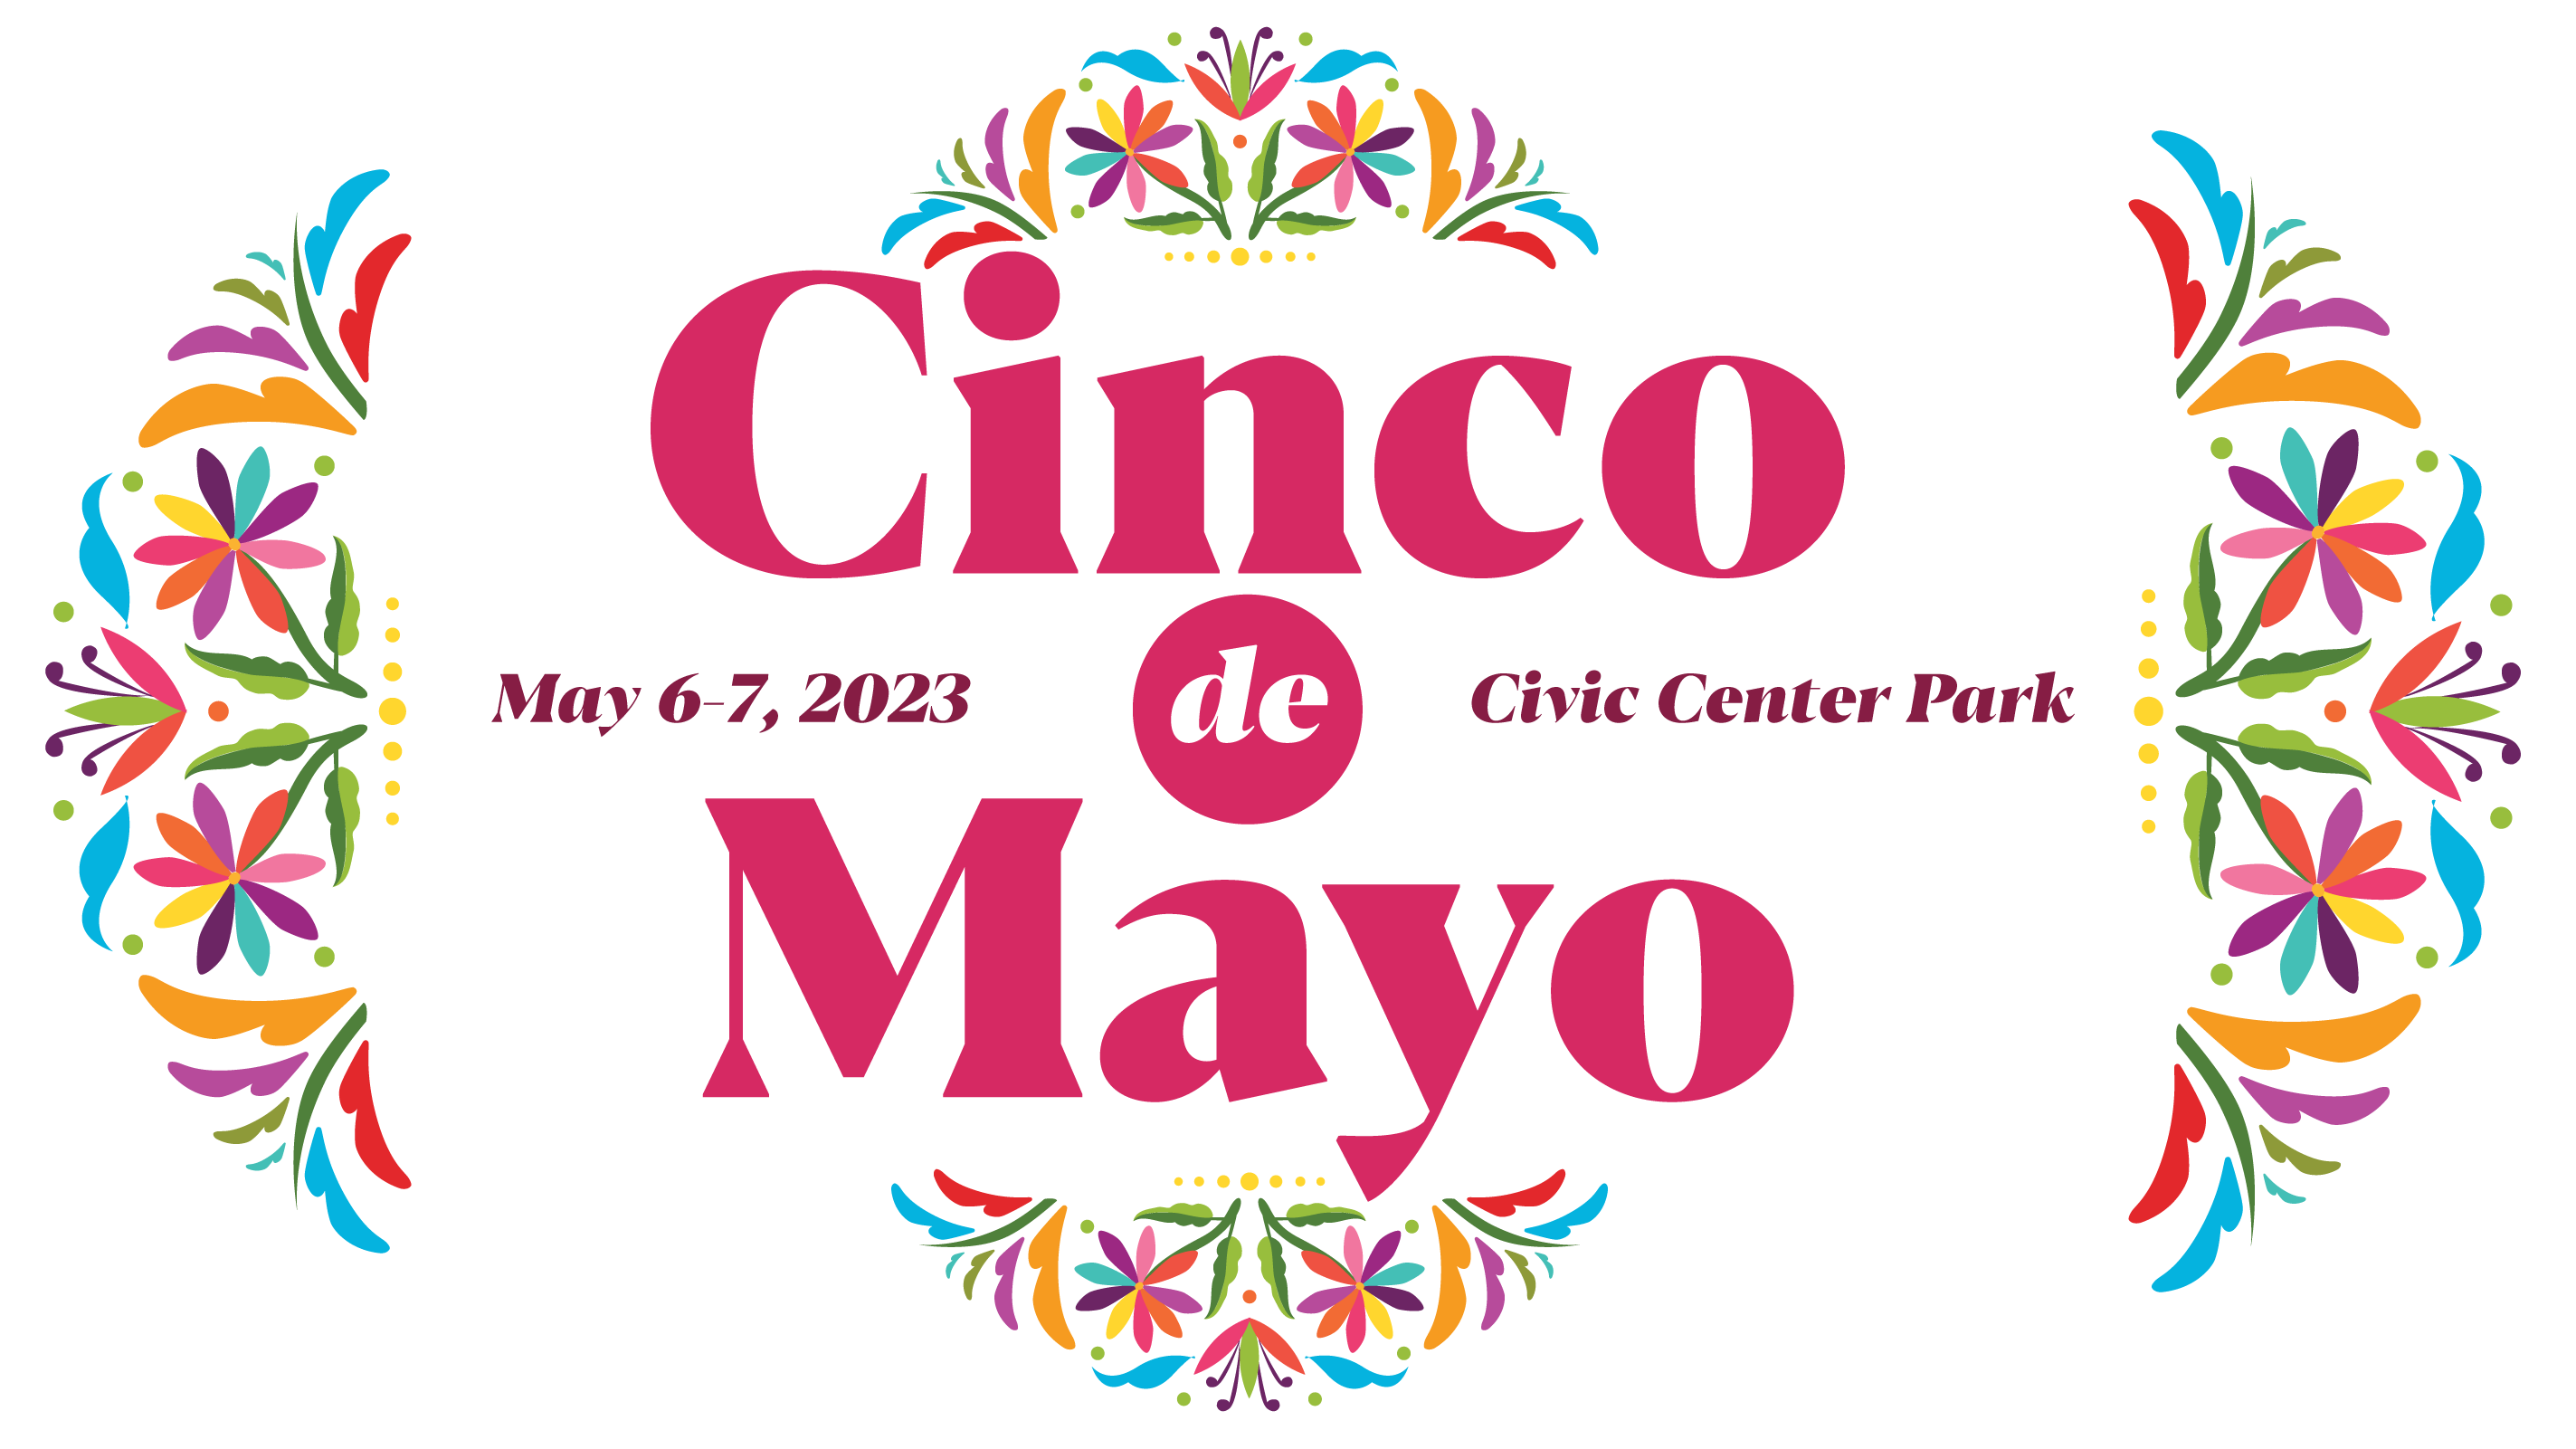 Cinco de Mayo, May 6-7, 2023 in Civic Center Park